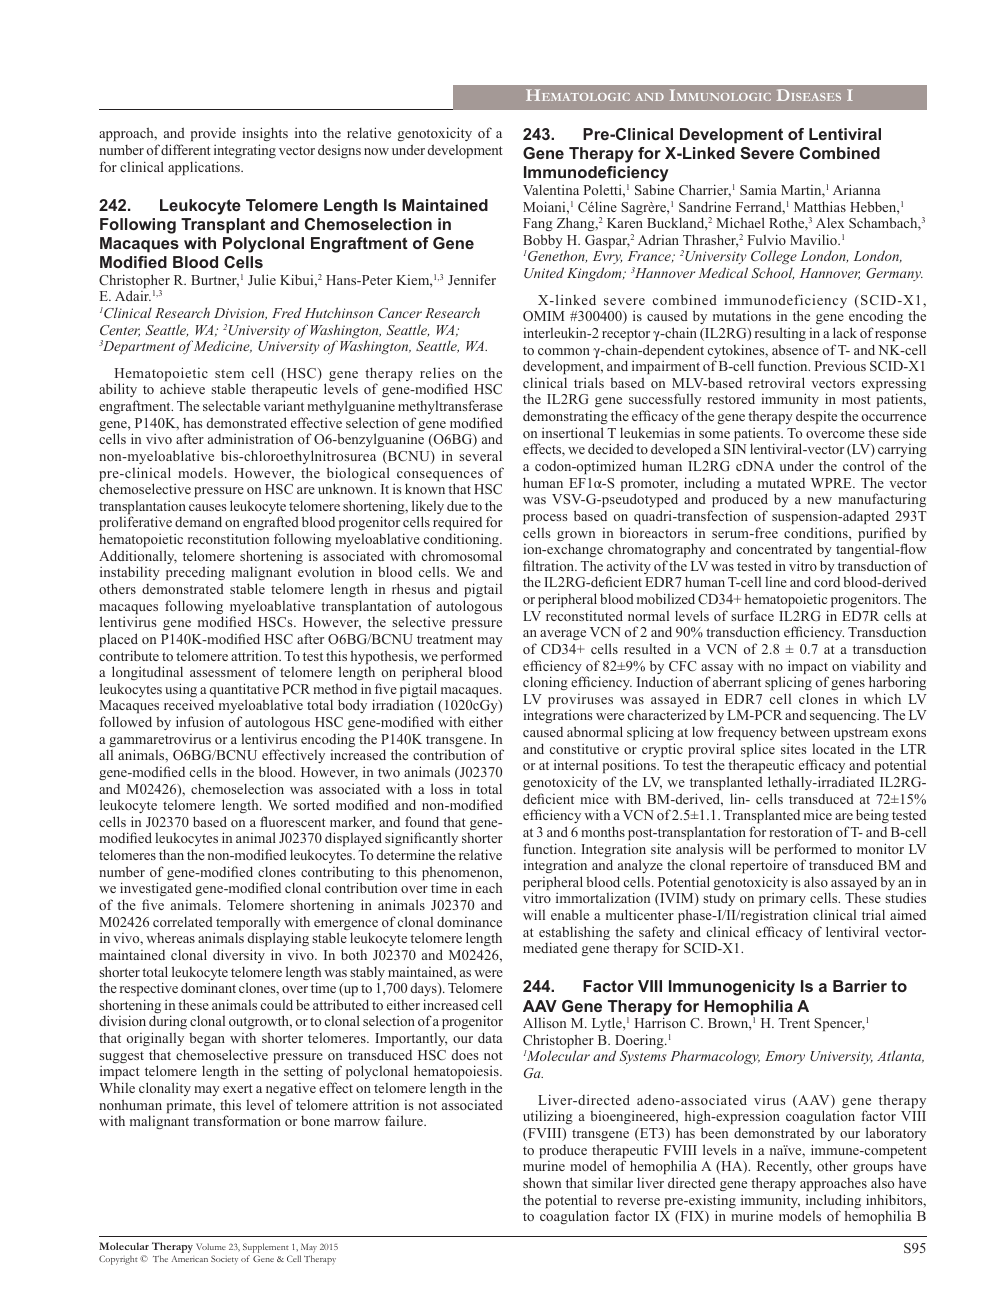 hemophilia research paper